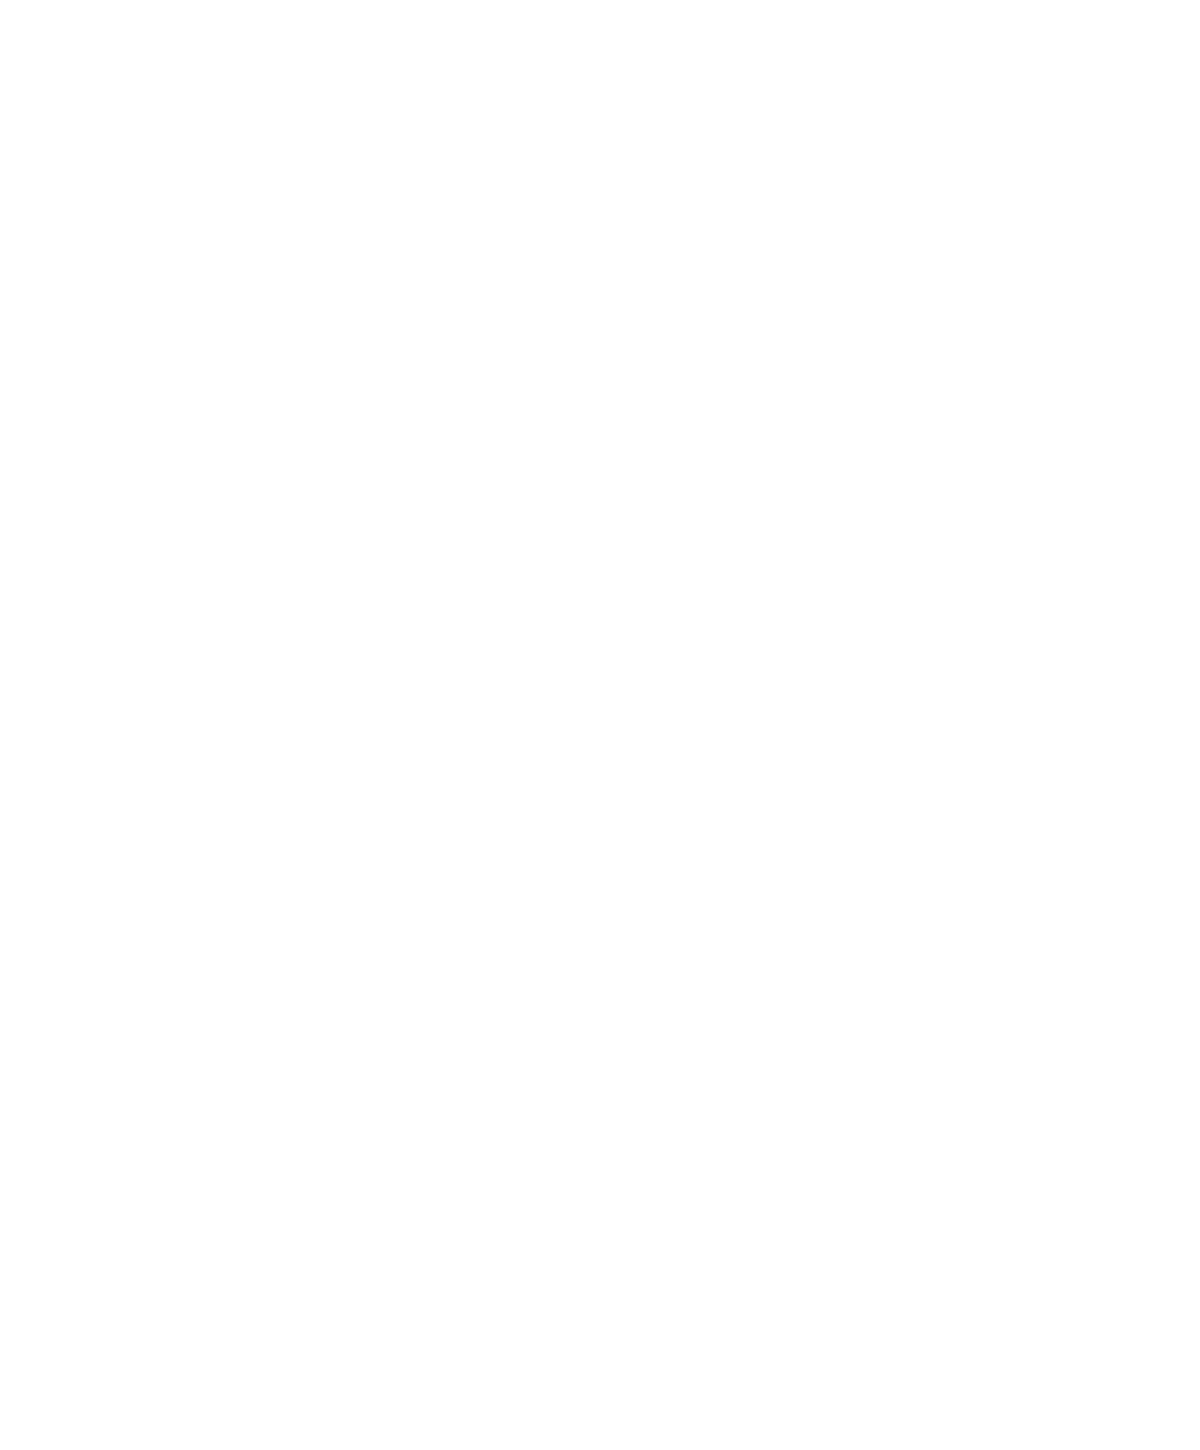 Equality North Carolina Action Fund PAC